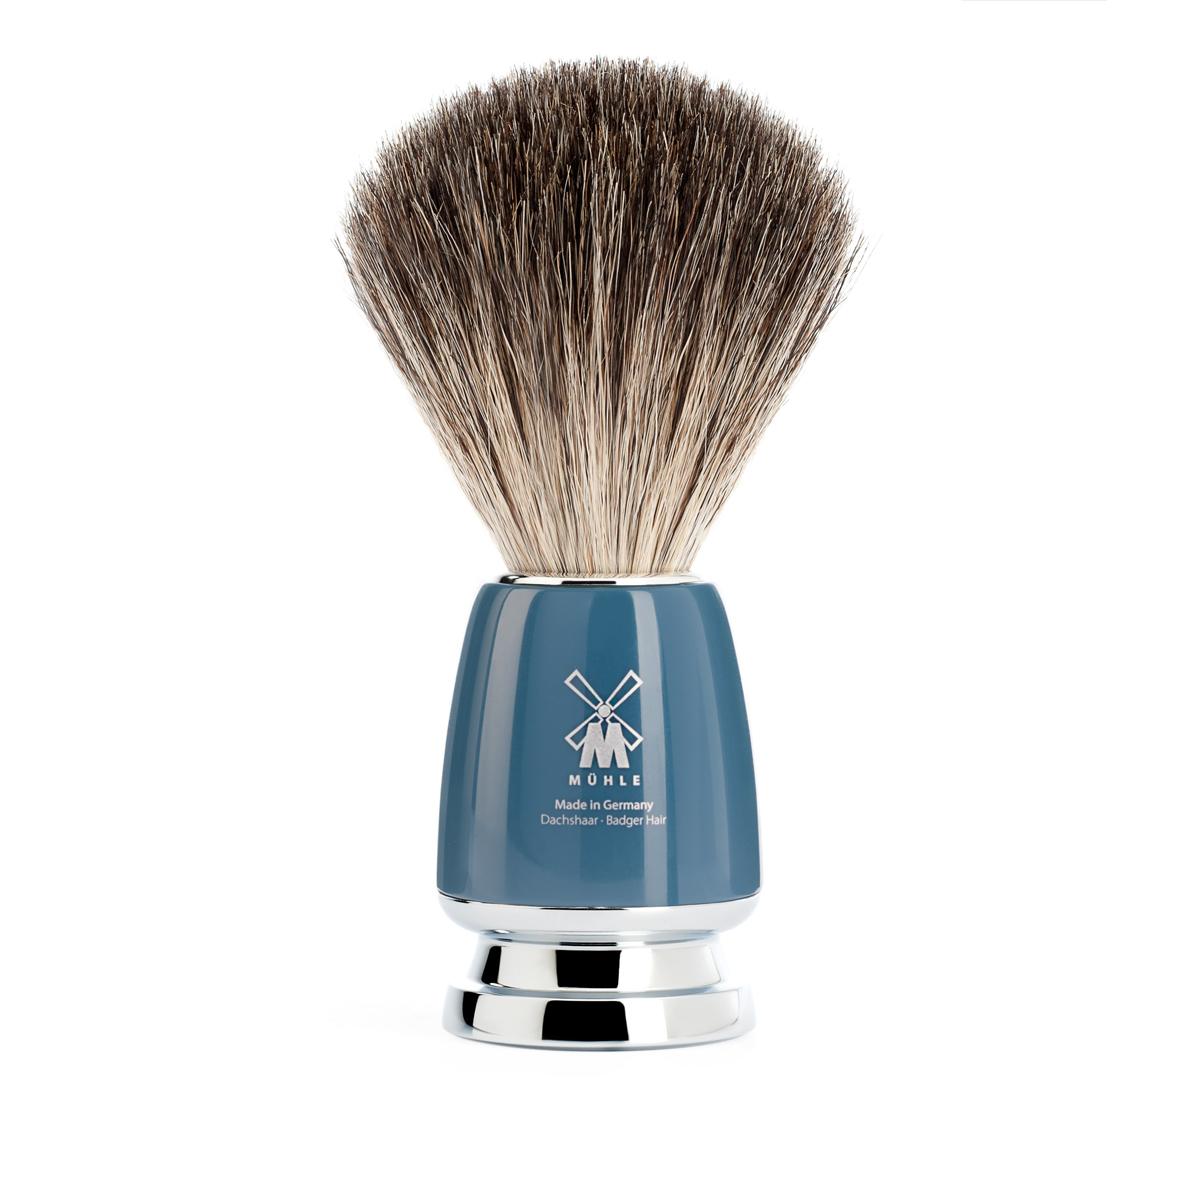 MUHLE RYTMO Pure Badger Shaving Brush in Petrol Blue